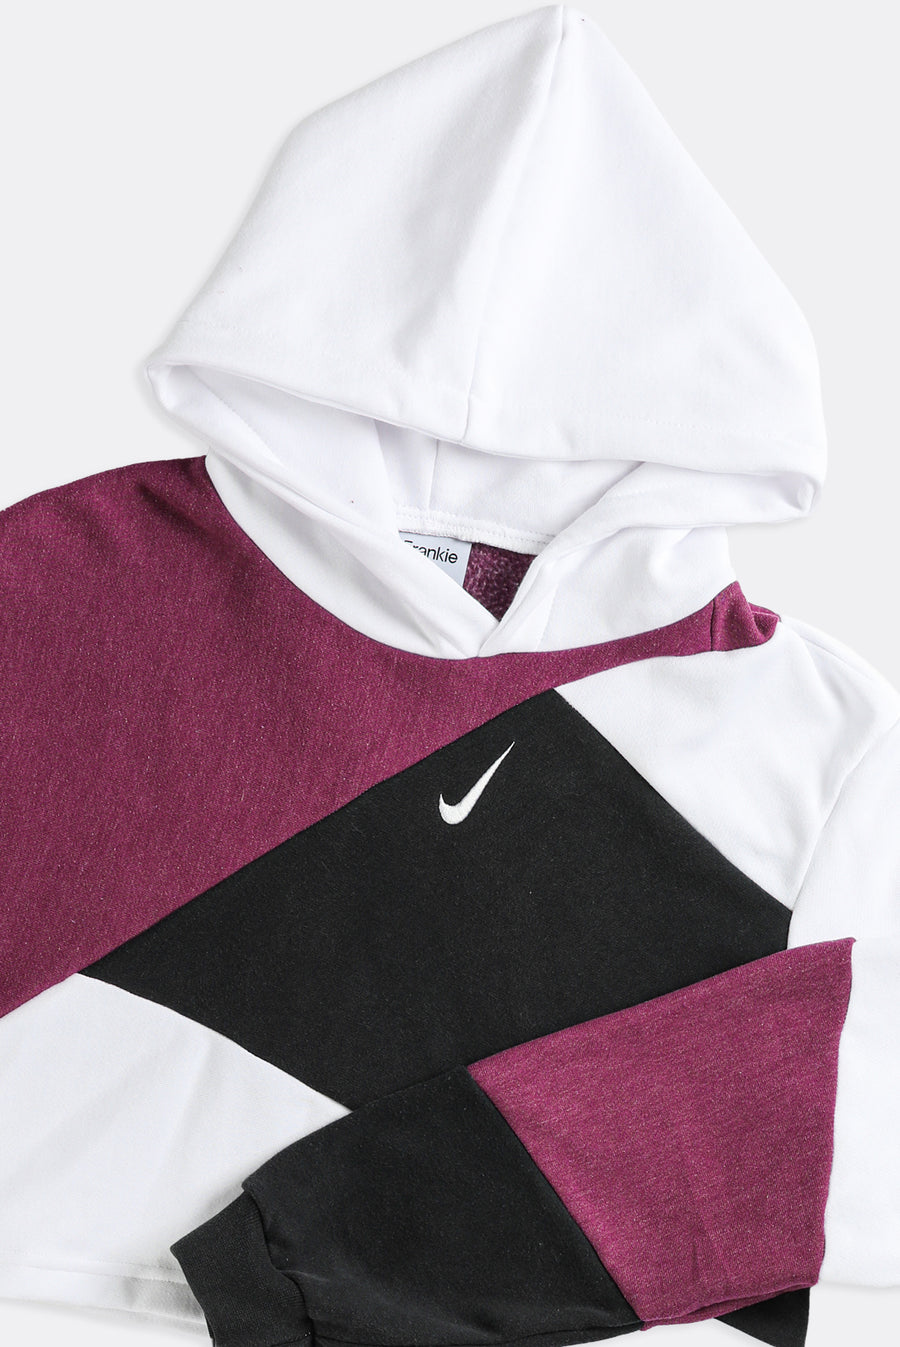 Rework Nike Patchwork Crop Sweatshirt - S